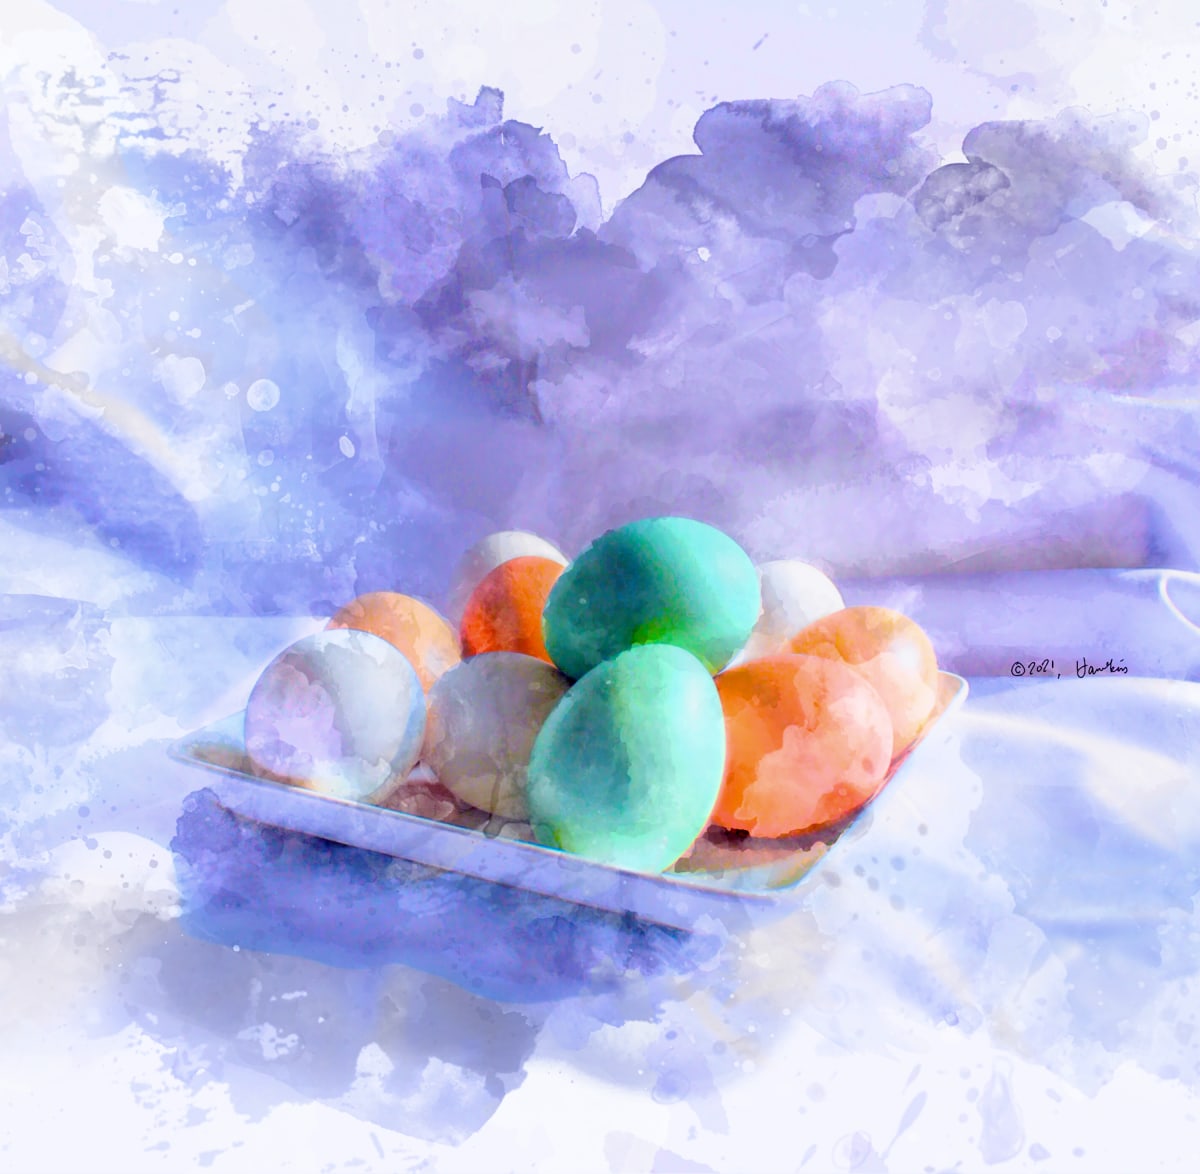 Araucana Eggs  Image: Several multicolored Araucana eggs in a dish